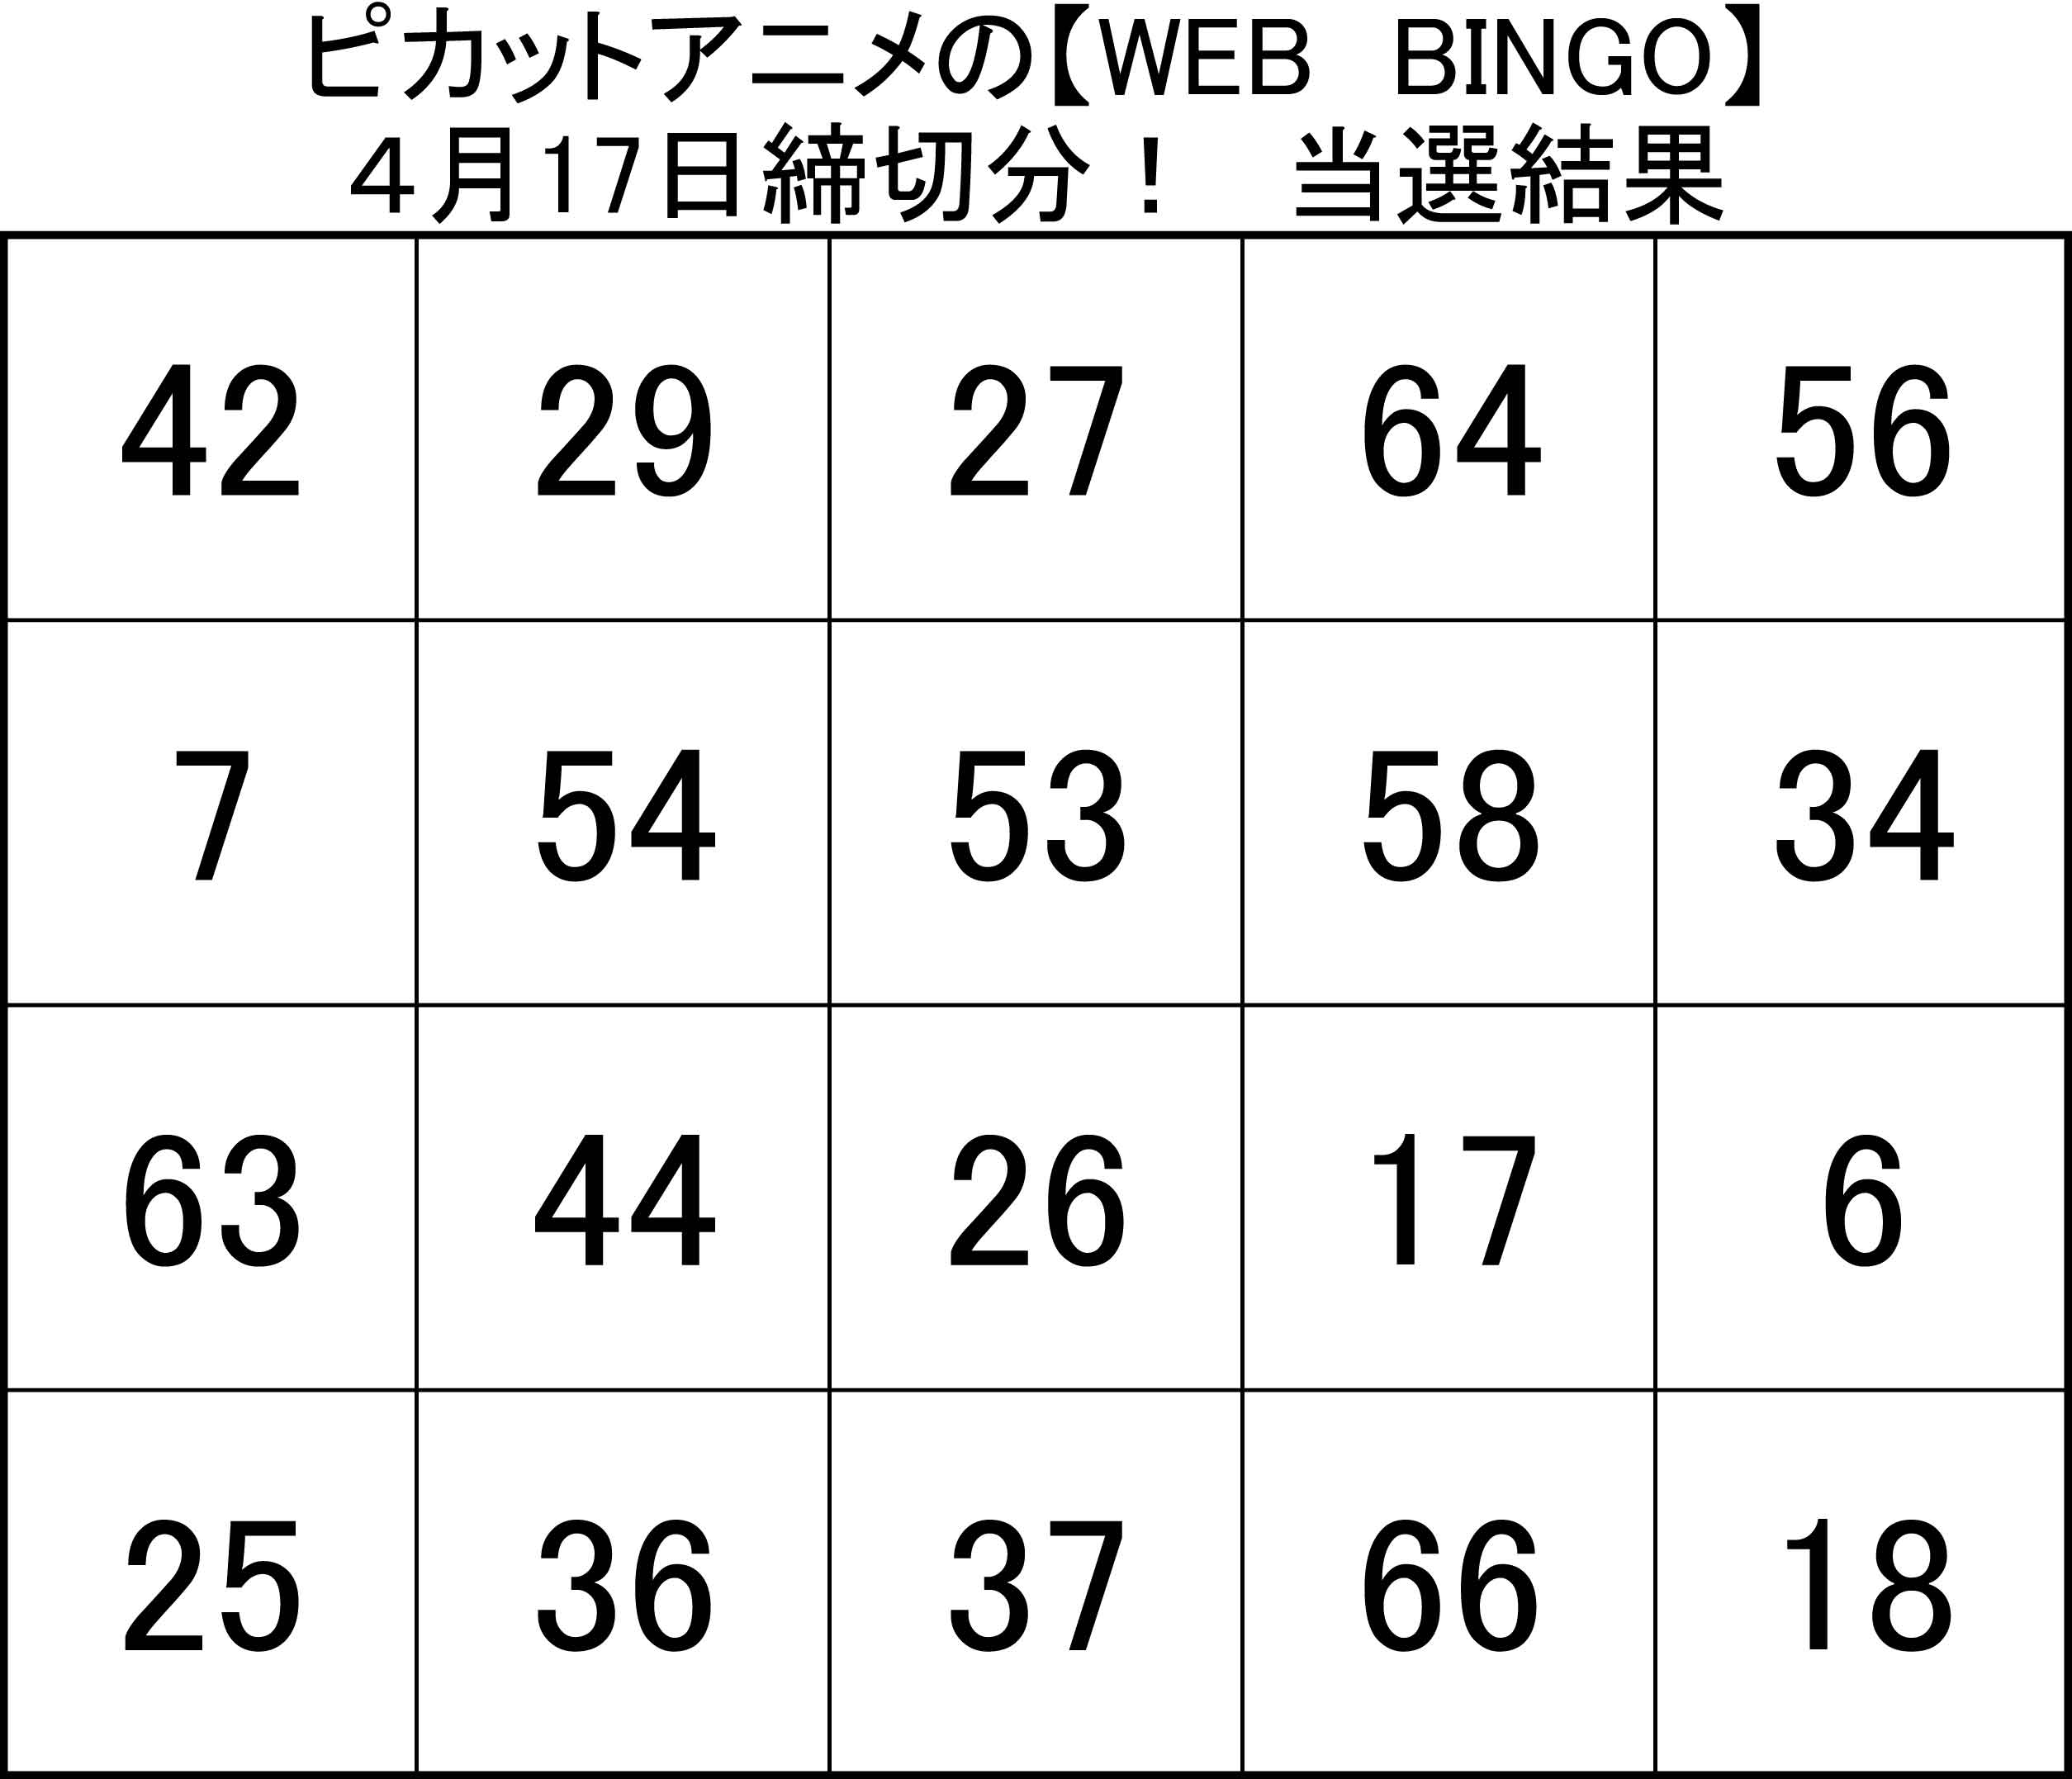 Web版 Bingo 説明 オススメ商品 Pikattoanime